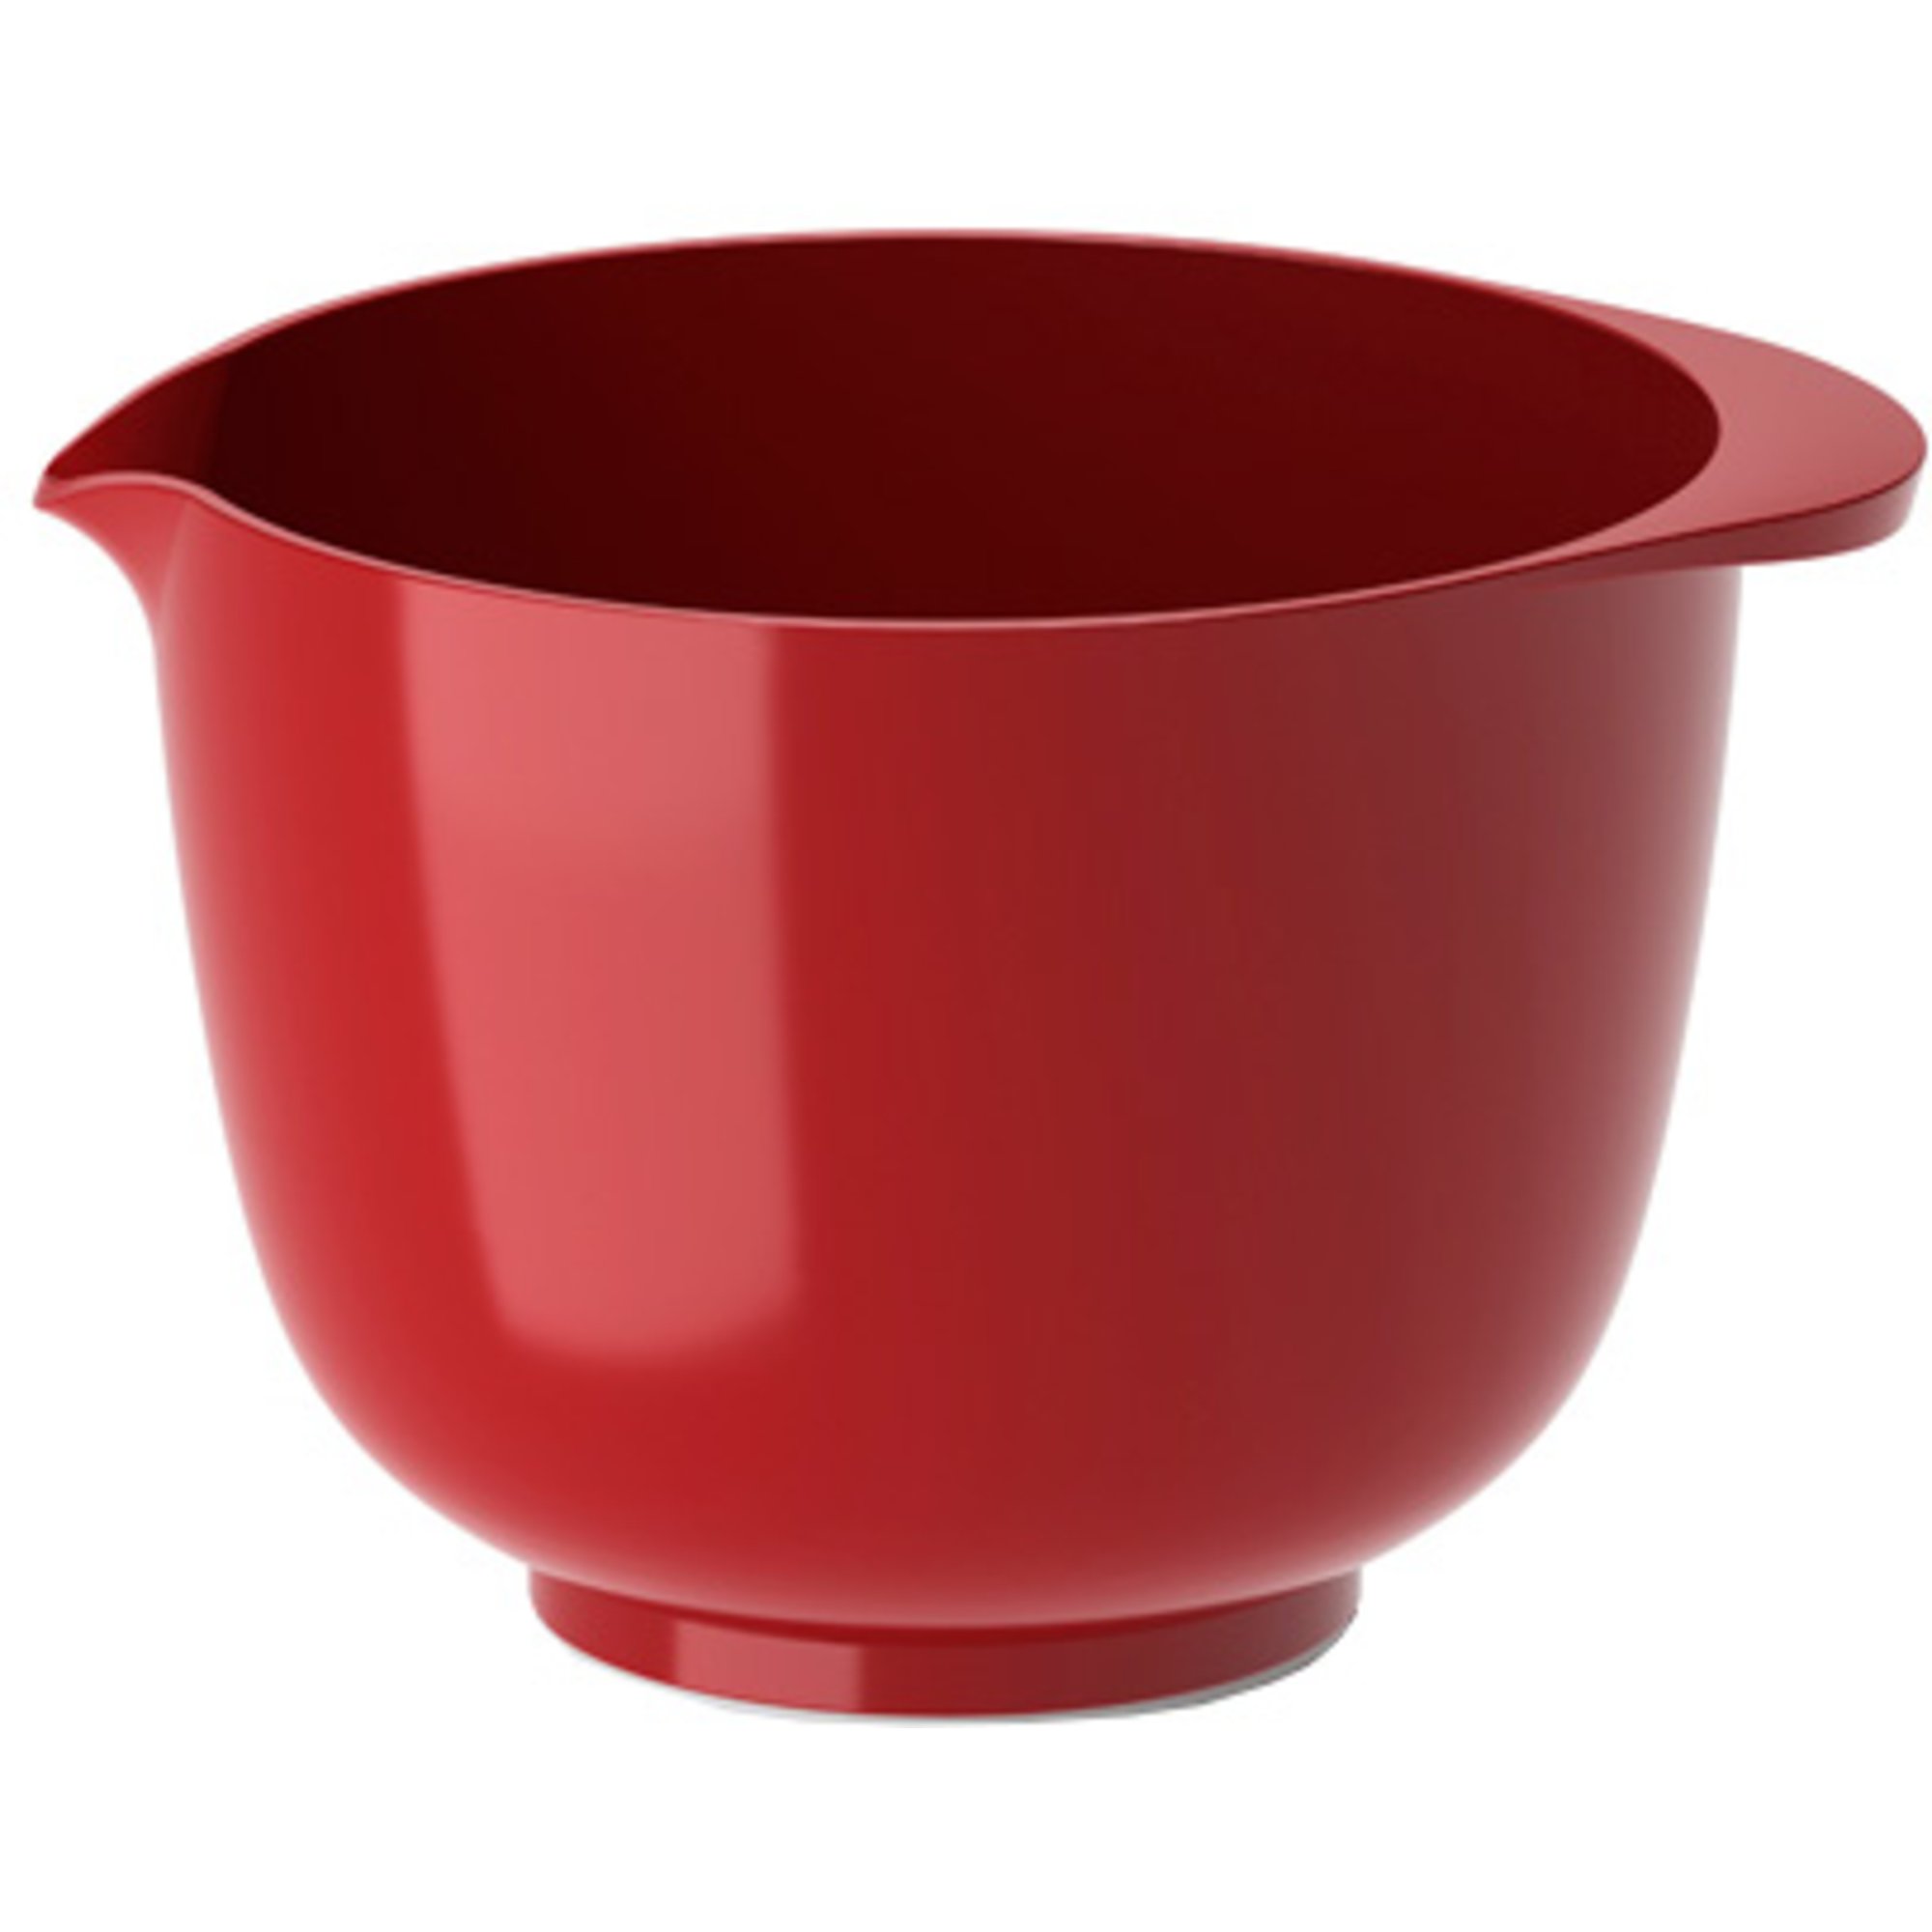 Rosti Margrethe skål 1,5 liter röd